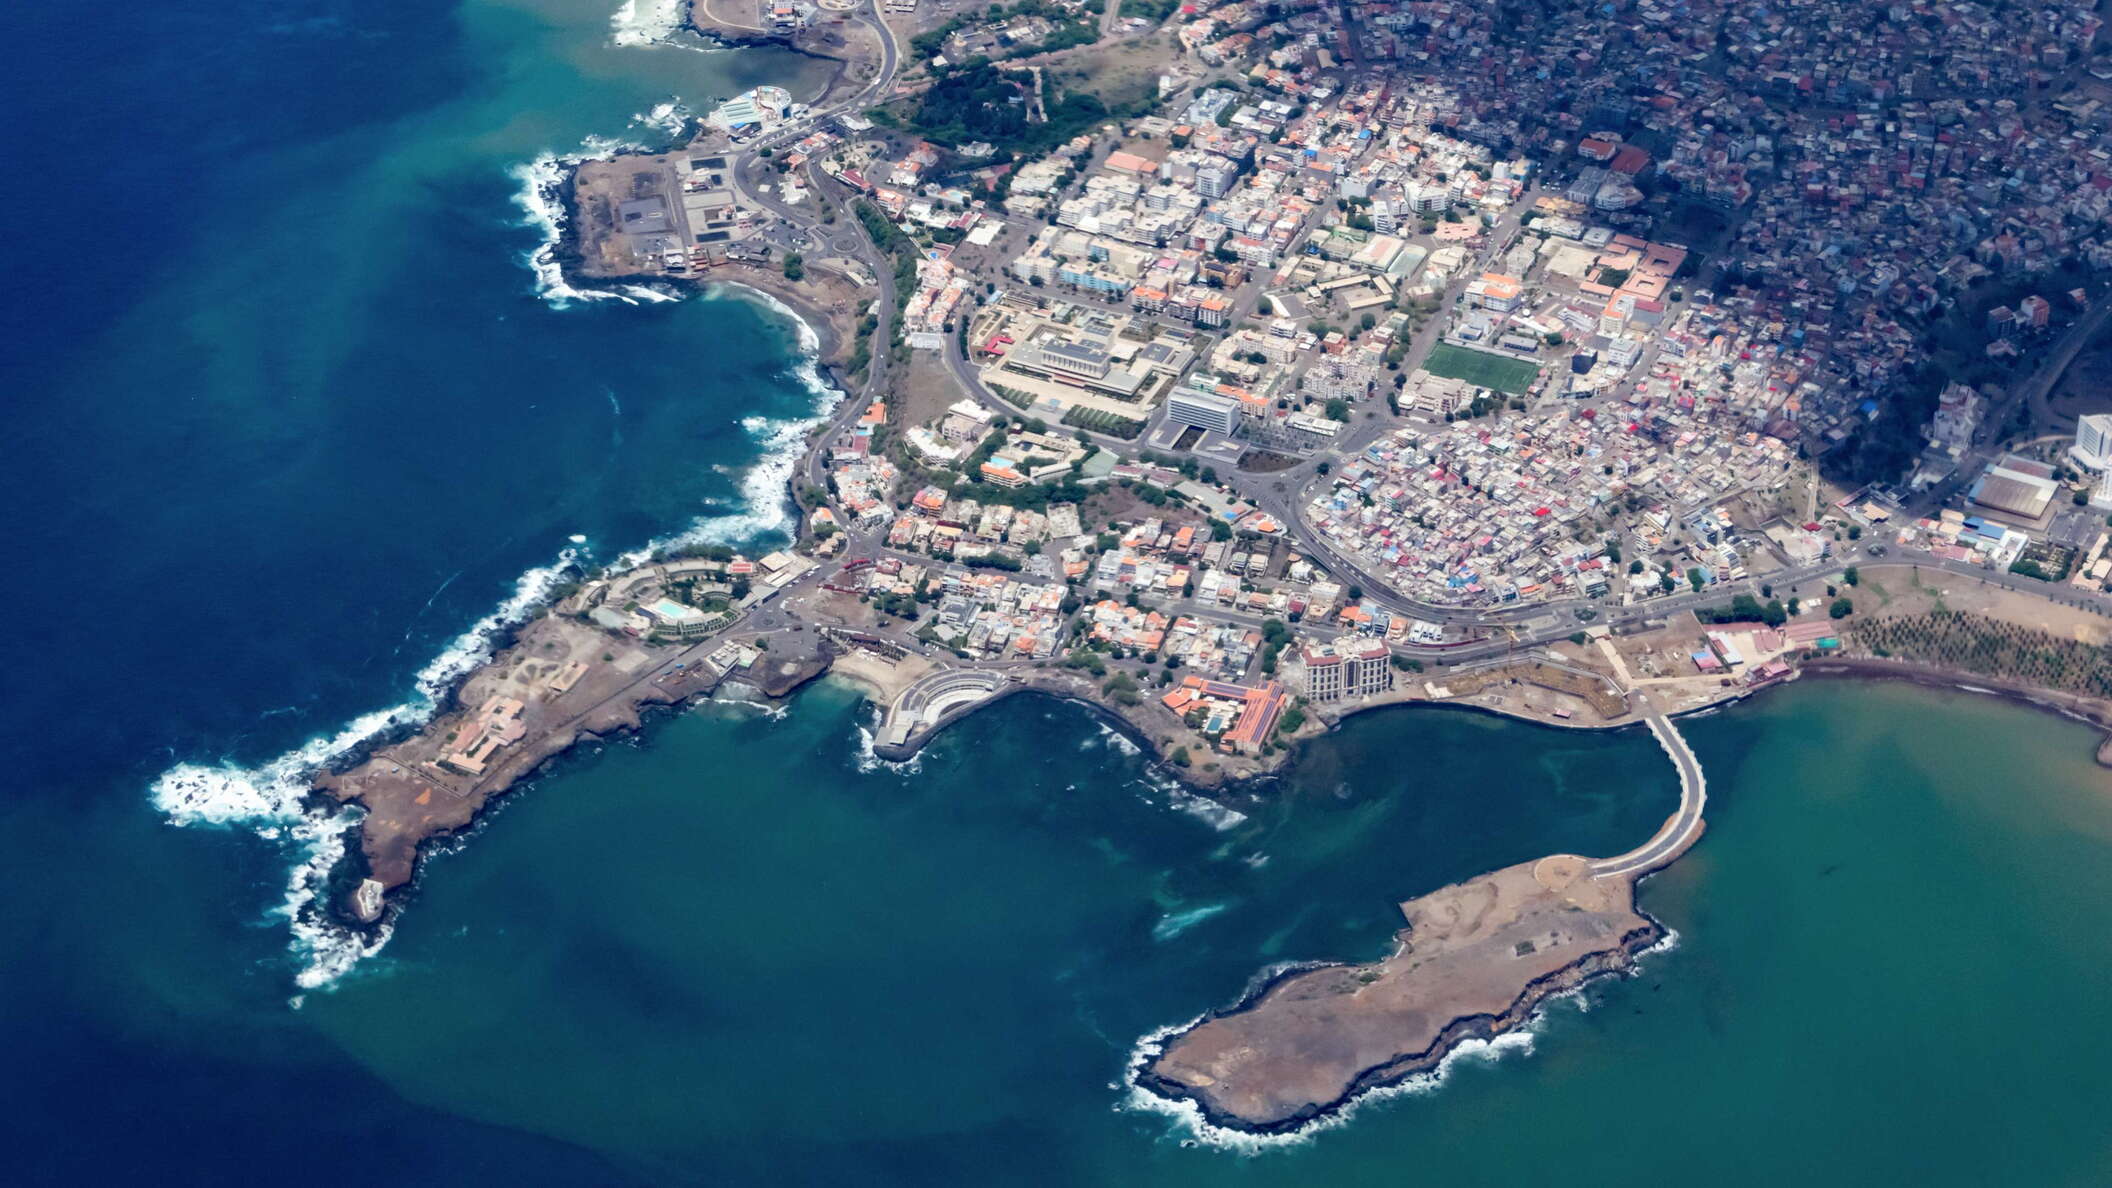 Santiago | Aerial view of Praia